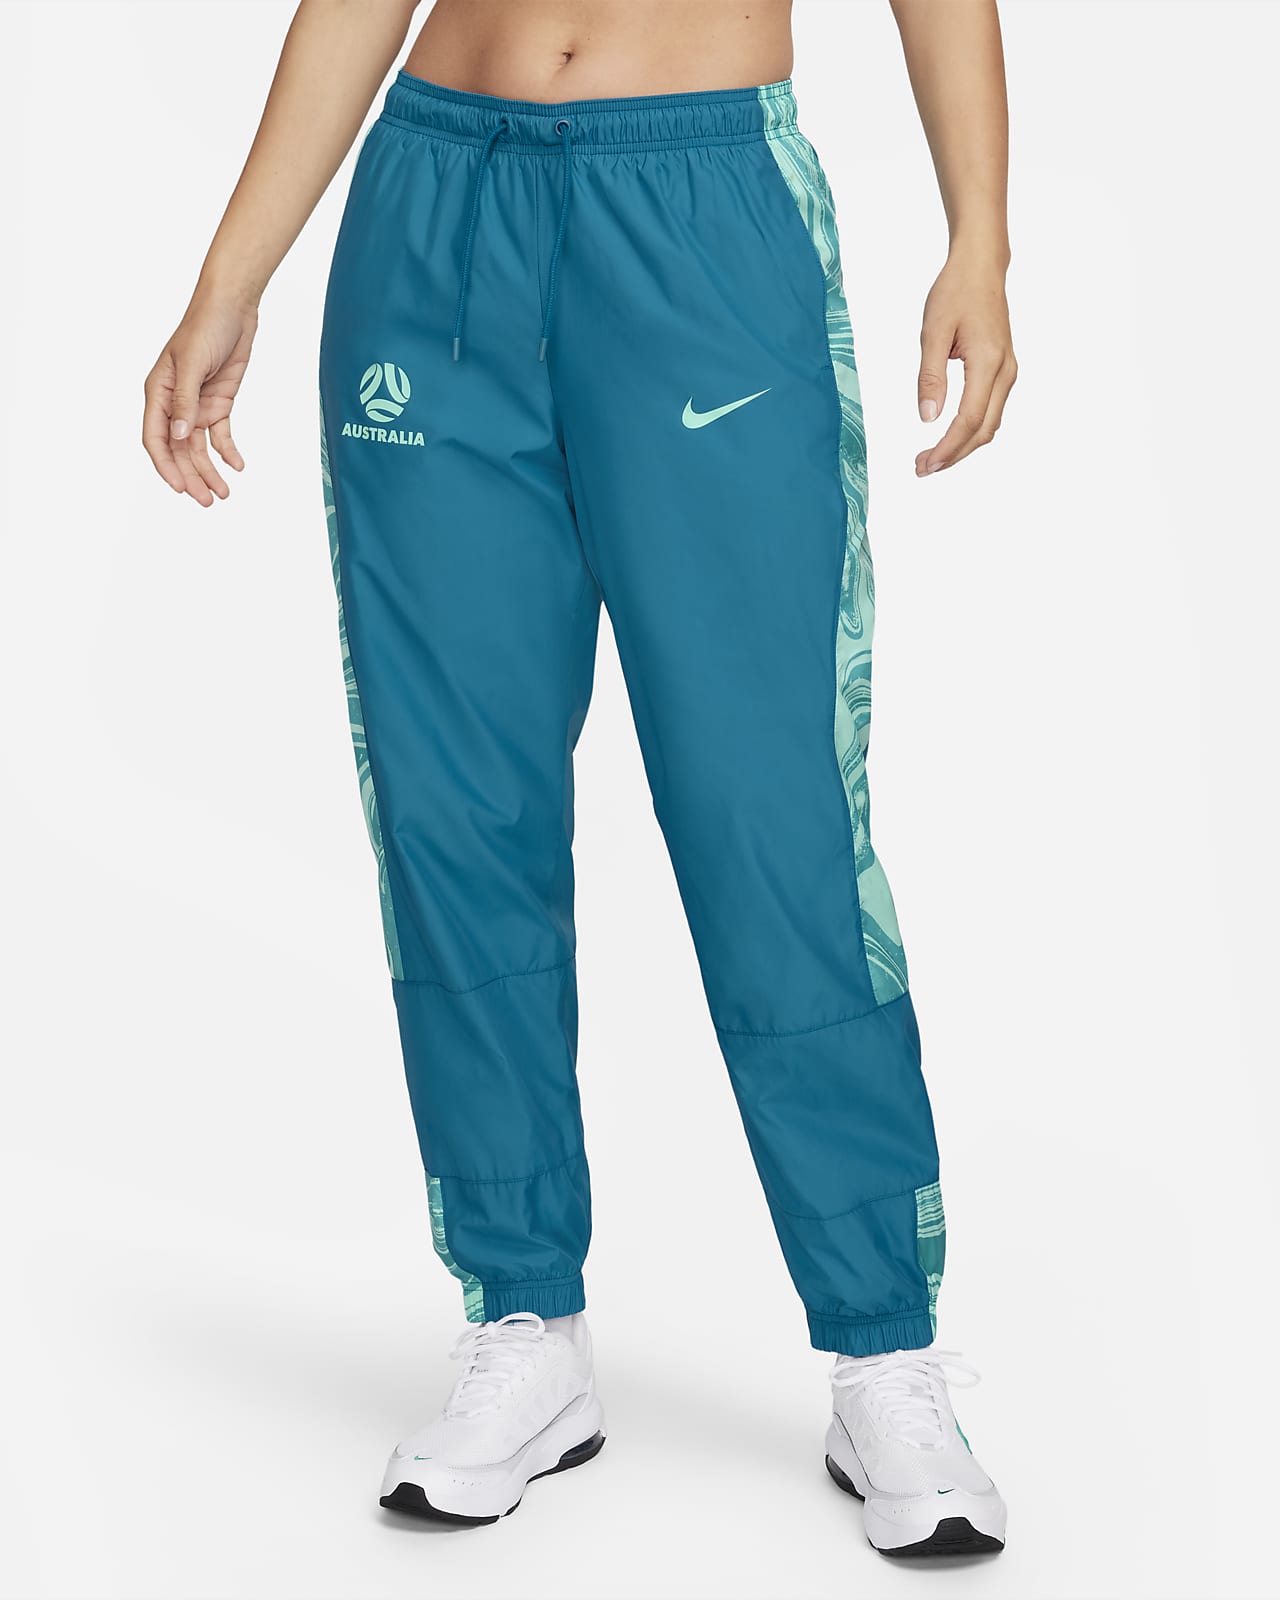 Women - Nike Track Pants - JD Sports Australia